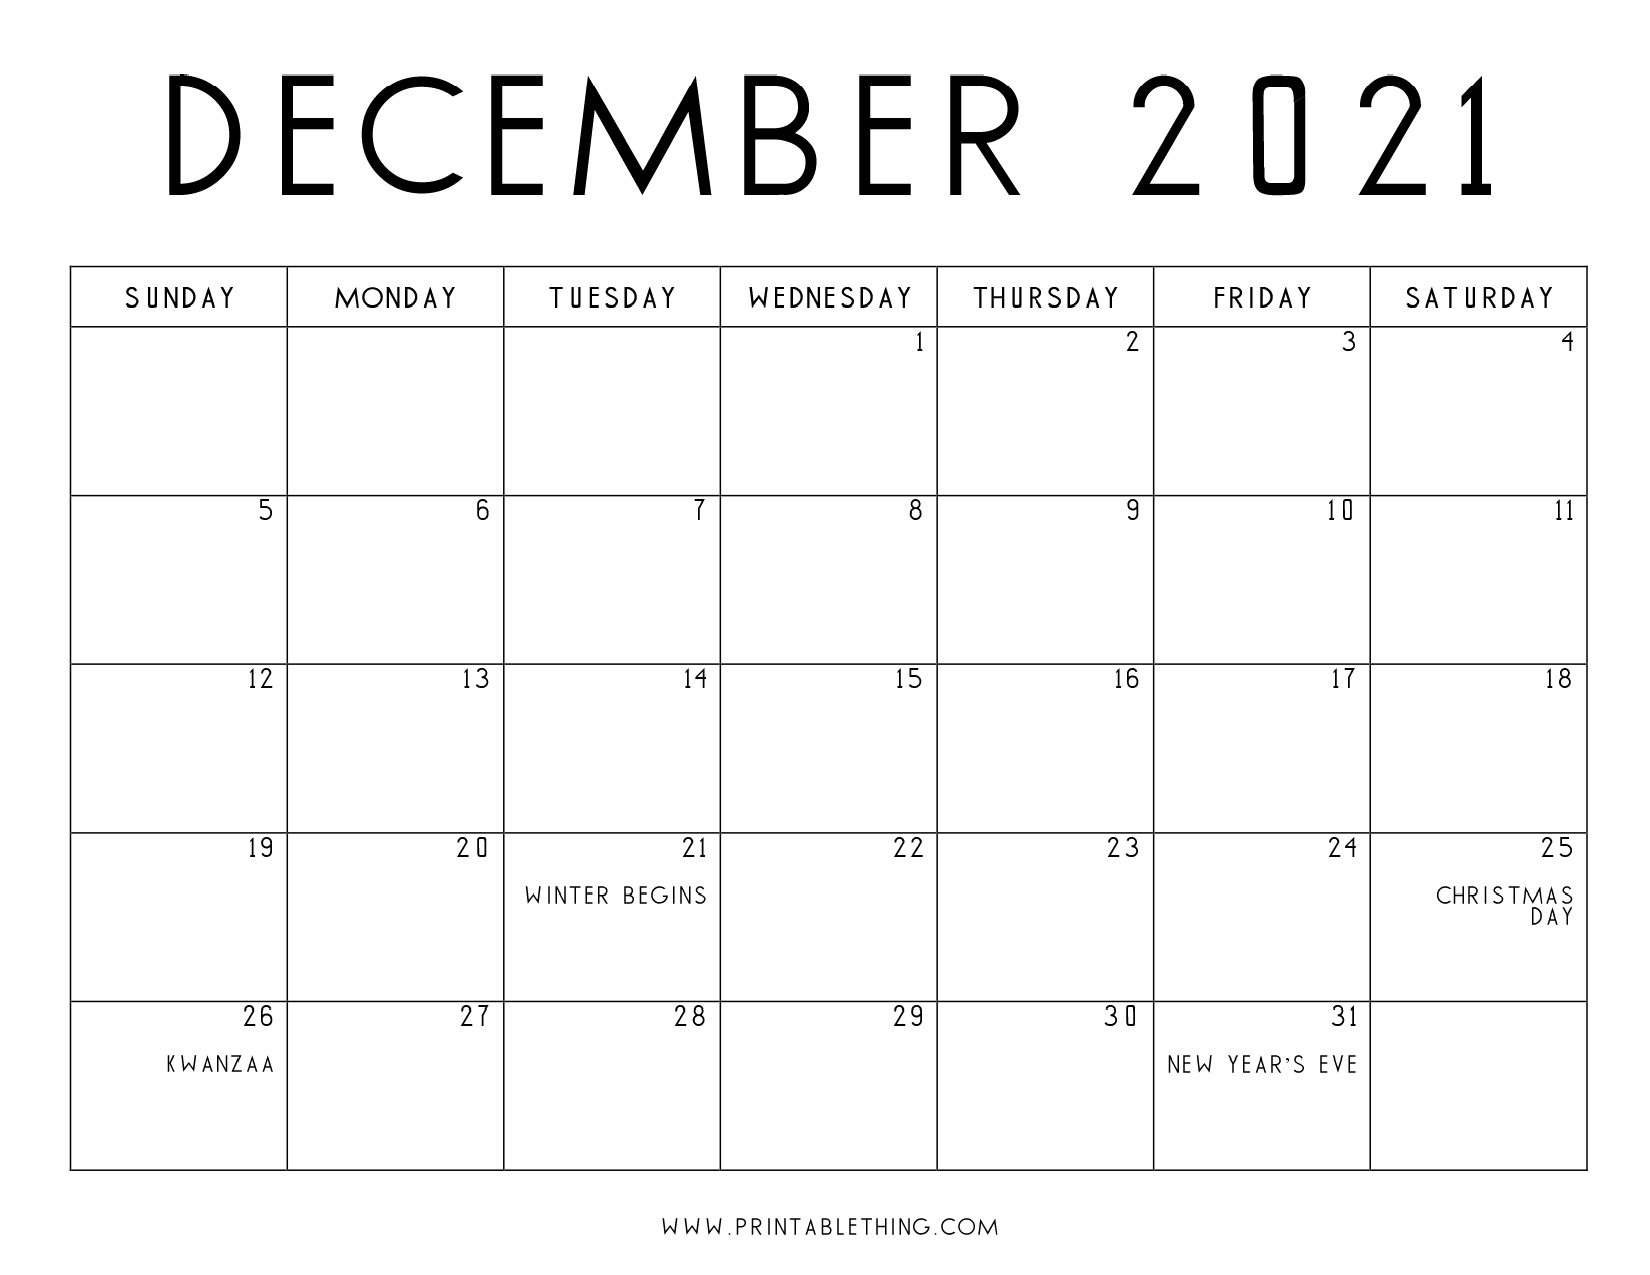 December 2021 Calendar Pdf December 2021 Calendar Image Print